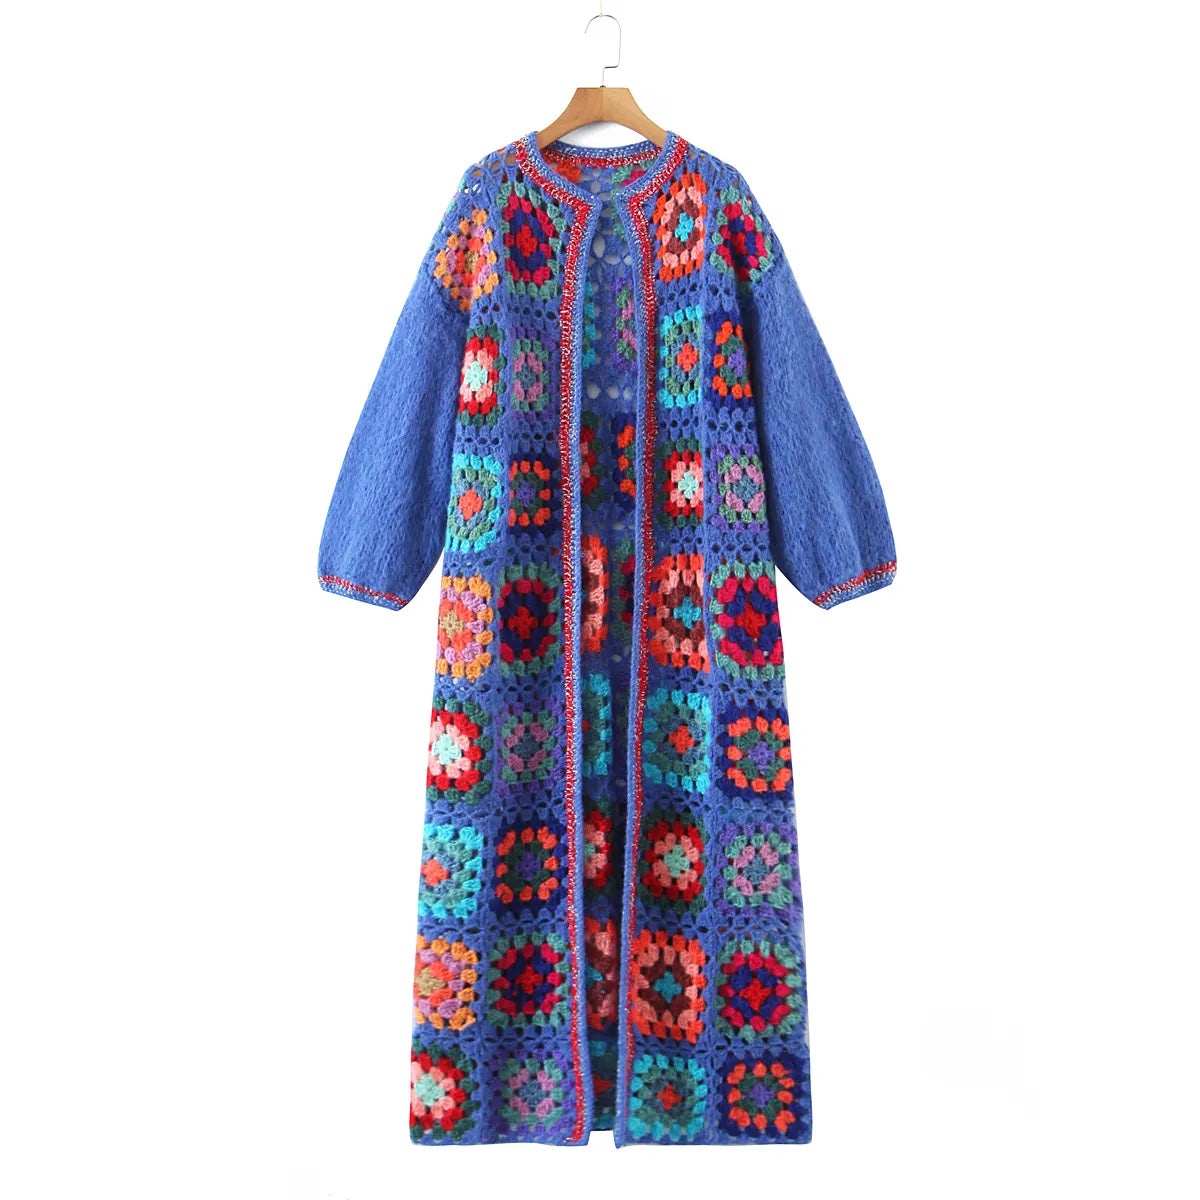 Bohemia Vintage Colored Plaid Flower Granny Square Hand Crochet Hooded Long Cardigan Coats & Jackets jehouze One Size Blue 